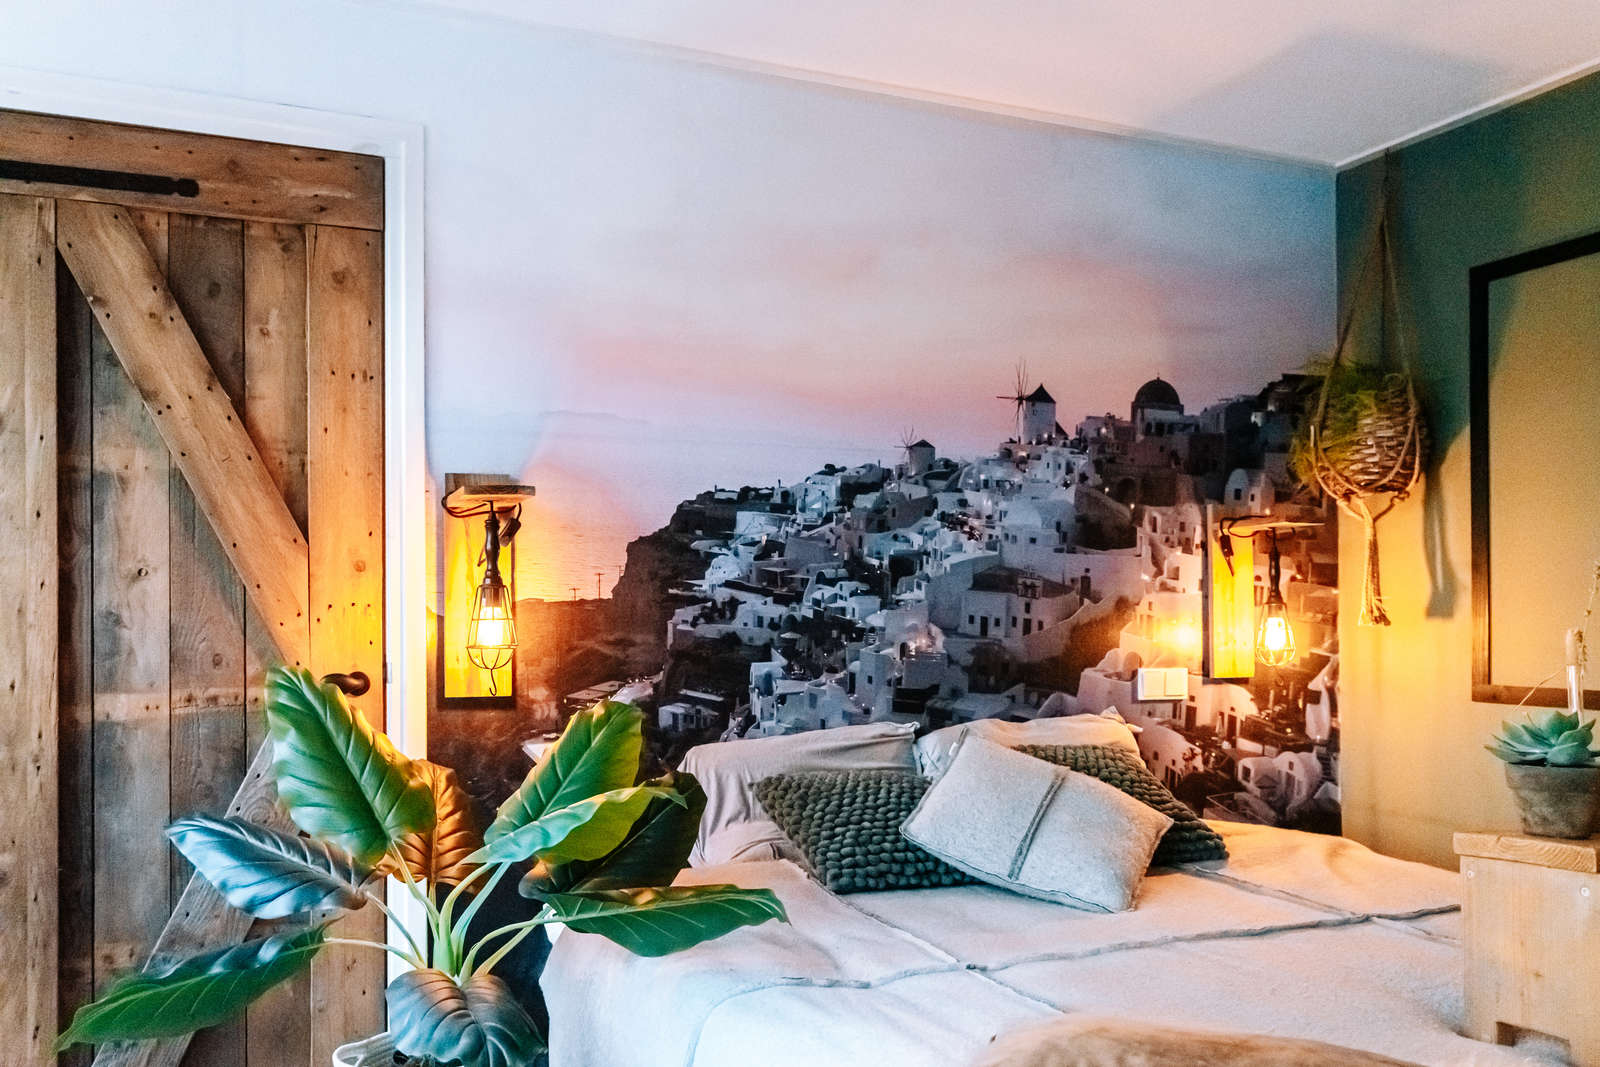             Photo wallpaper Sunset on Santorini - Premium smooth fleece
        